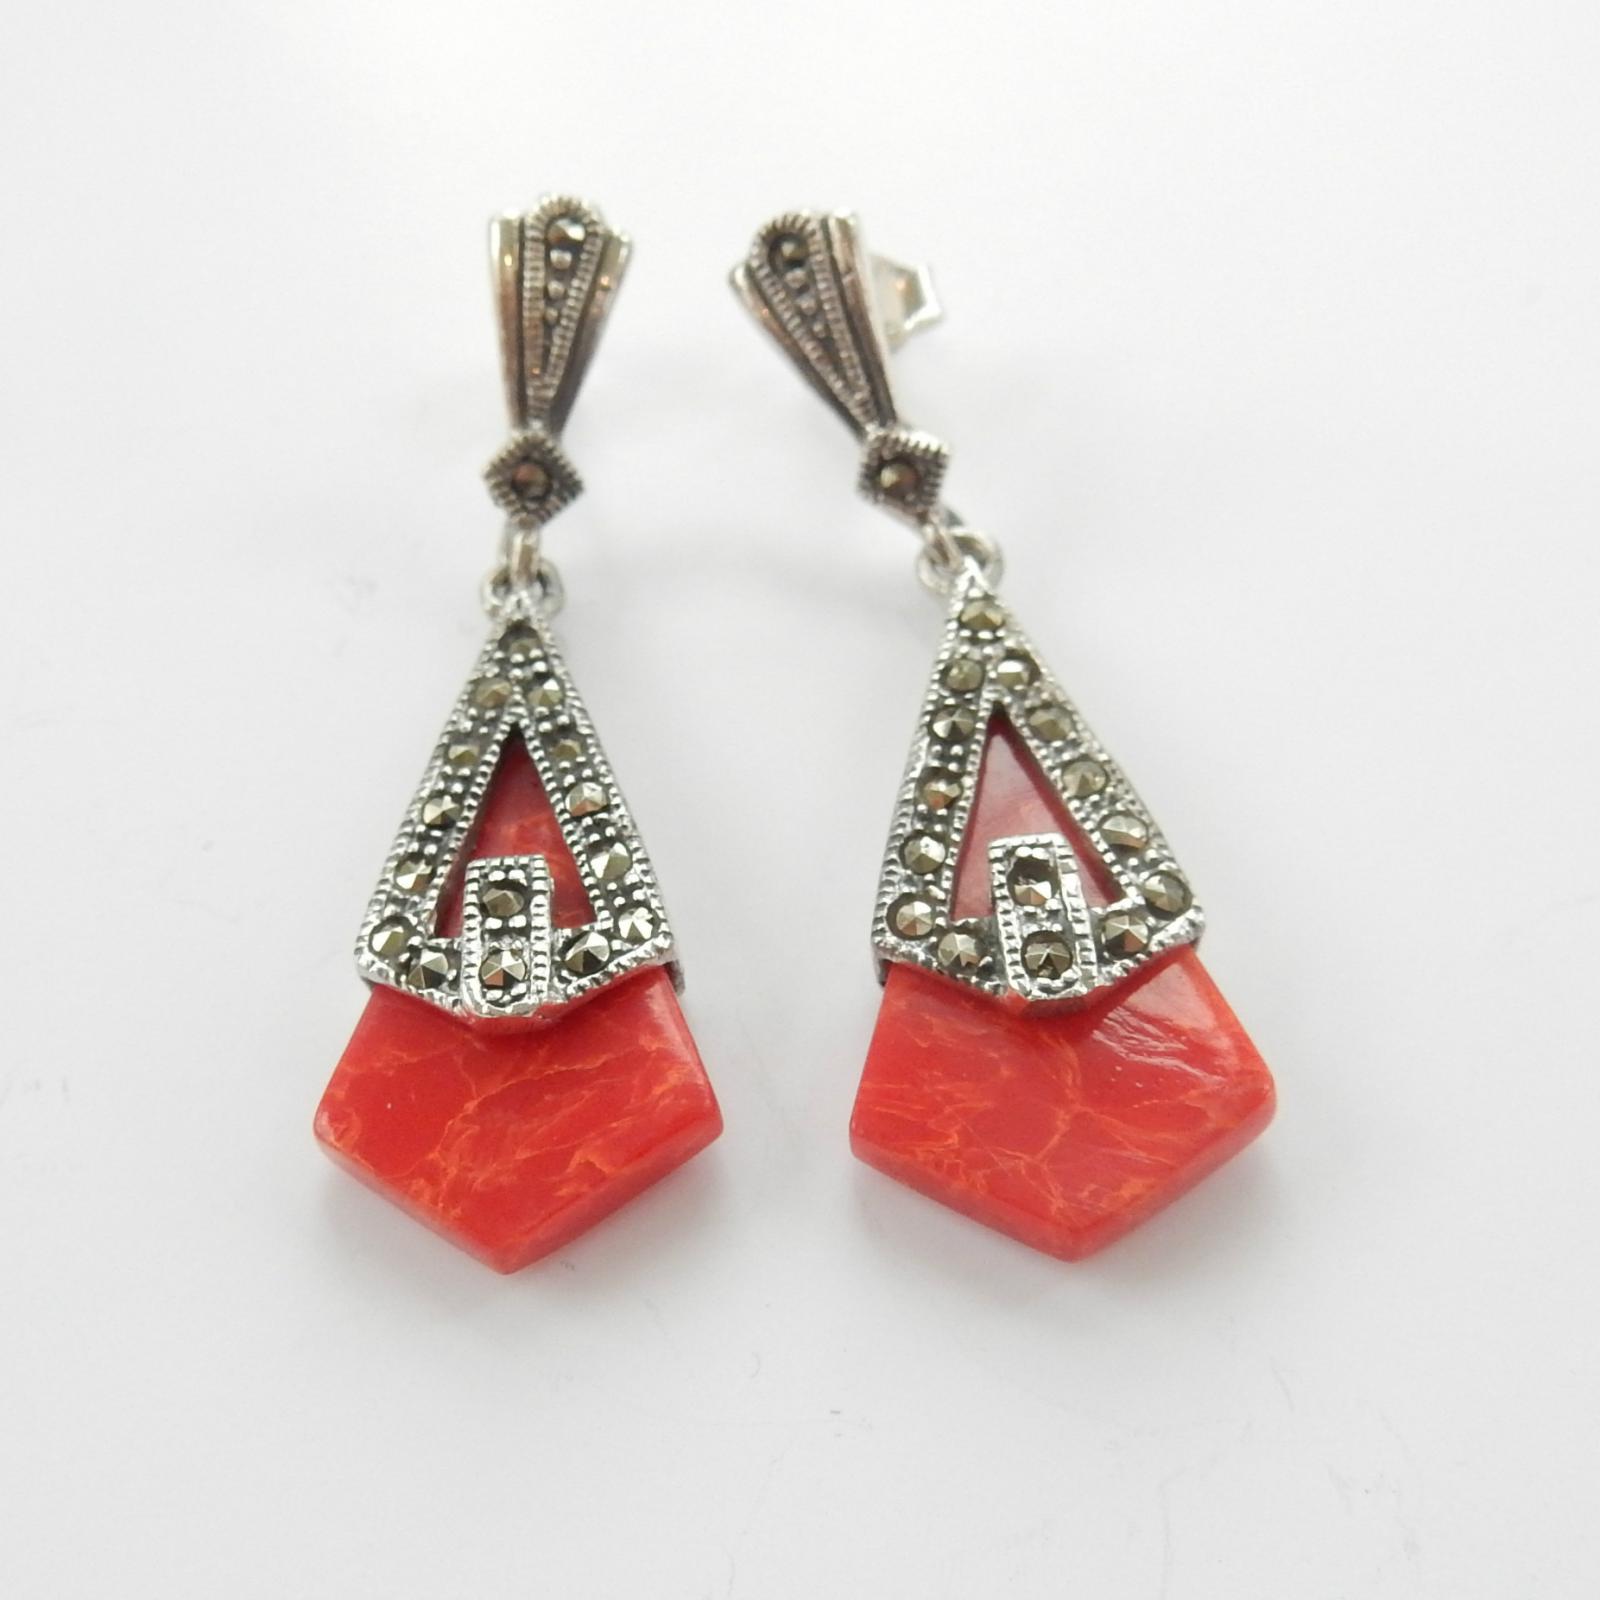 Art Deco coral and enamel long earrings, circa 1920. Jewellery & Gemstones  - Earrings - Auctionet